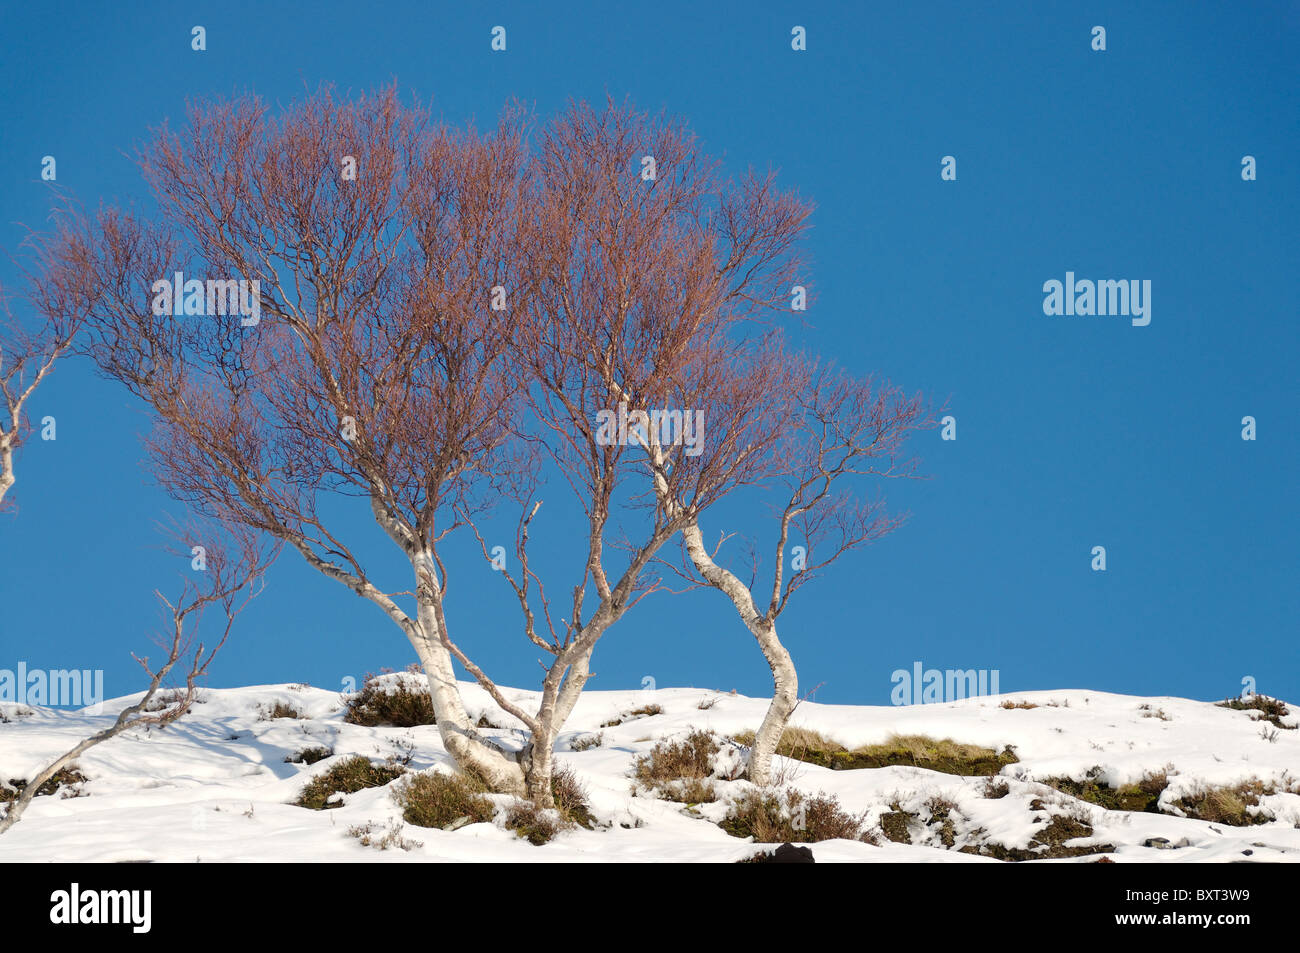 Silver Birch trees in winter Stock Photo